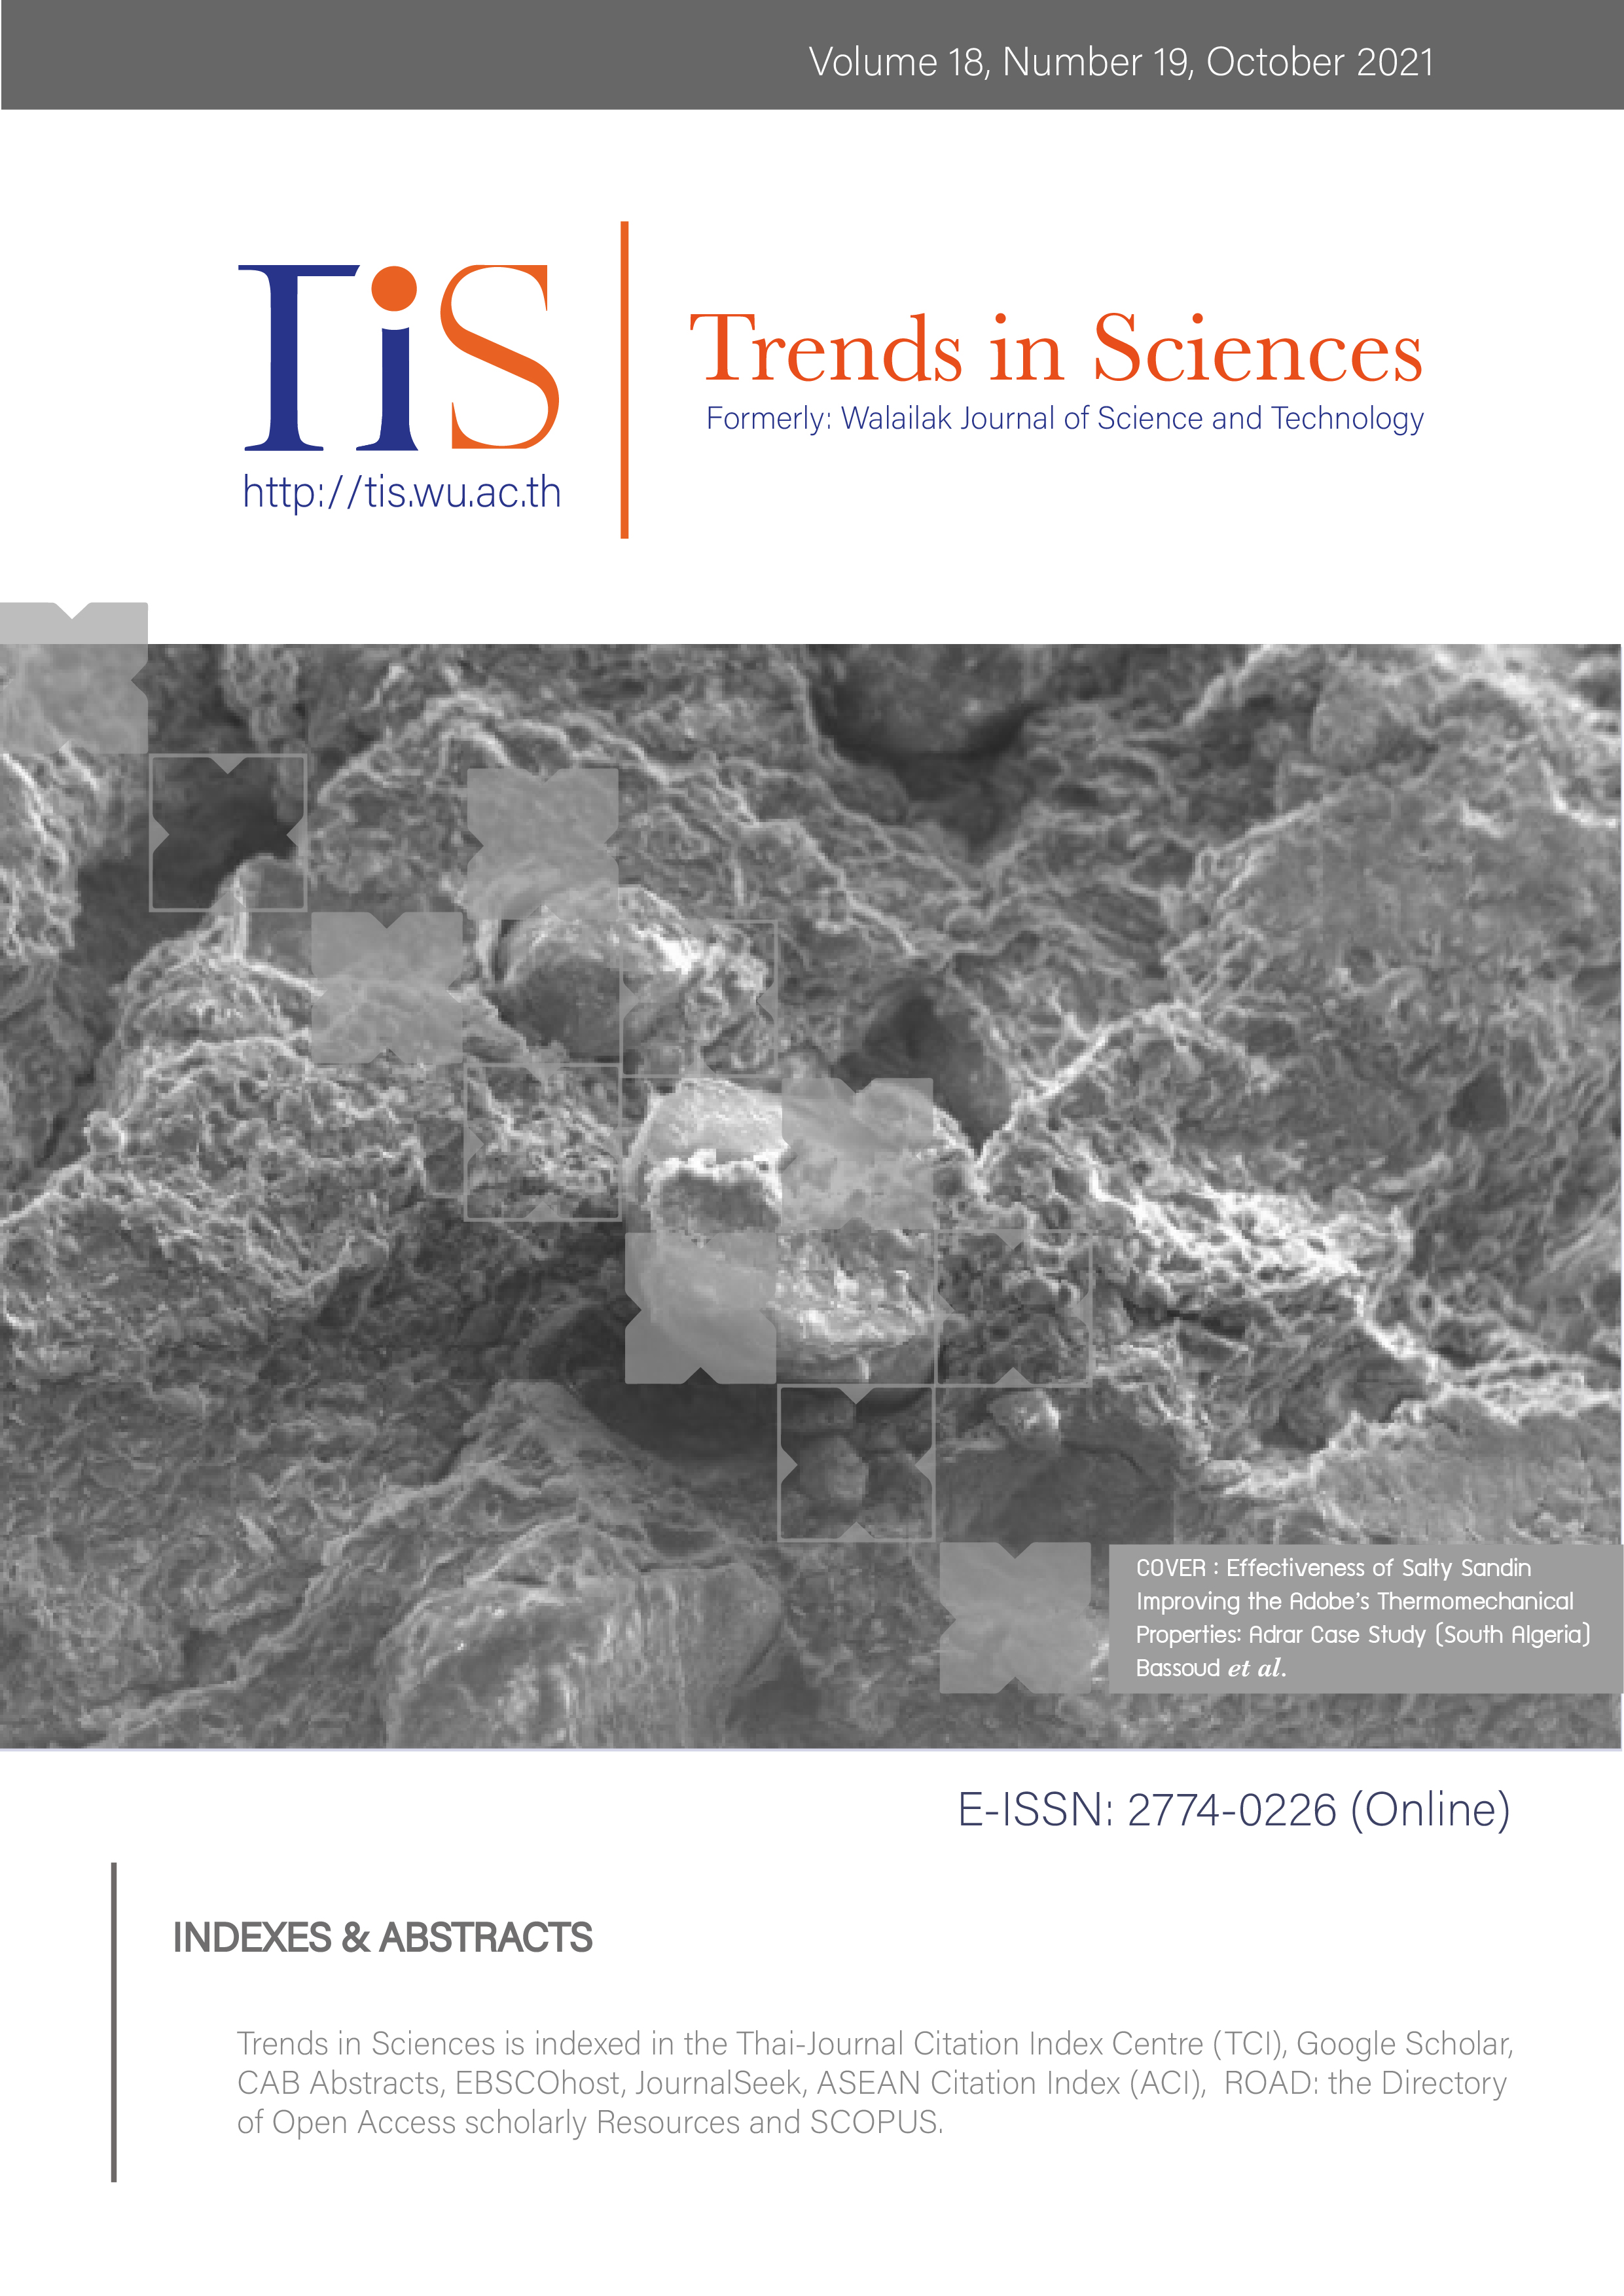 					View Vol. 18 No. 19 (2021): Trends in Sciences, Volume 18, Number 19, 1 October 2021
				